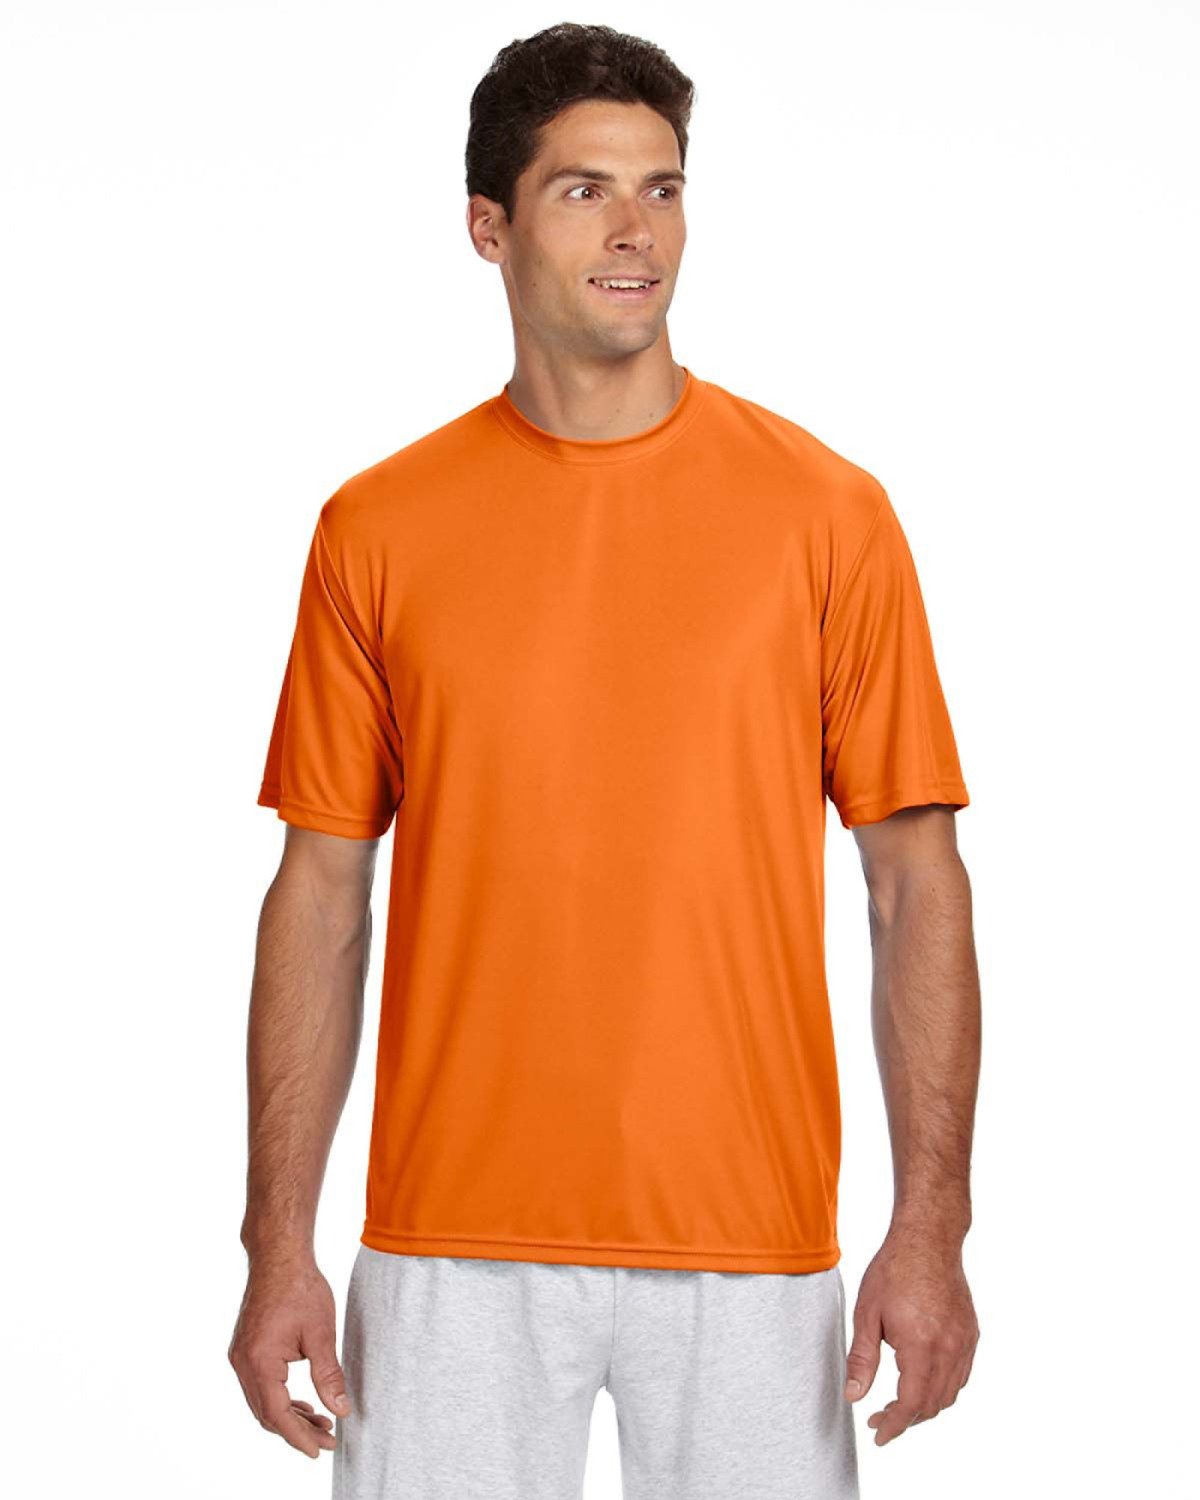 Safety orange t-shirt, front view.